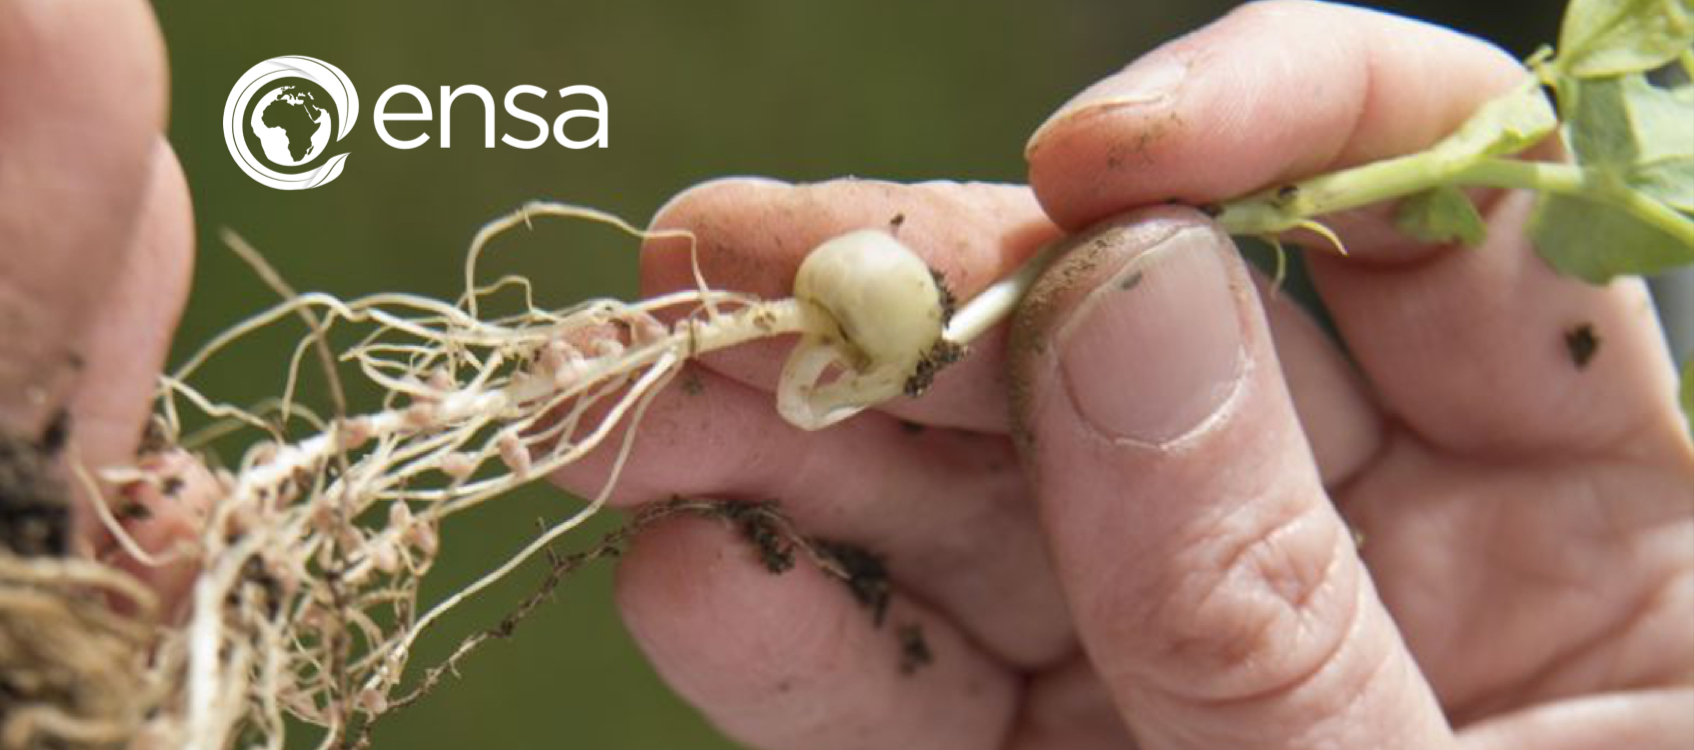 © 2021 Image courtesy of ENSA. Andrew Davis, Norwich, UK. Nitrogen-fixing nodules on a pea plant.